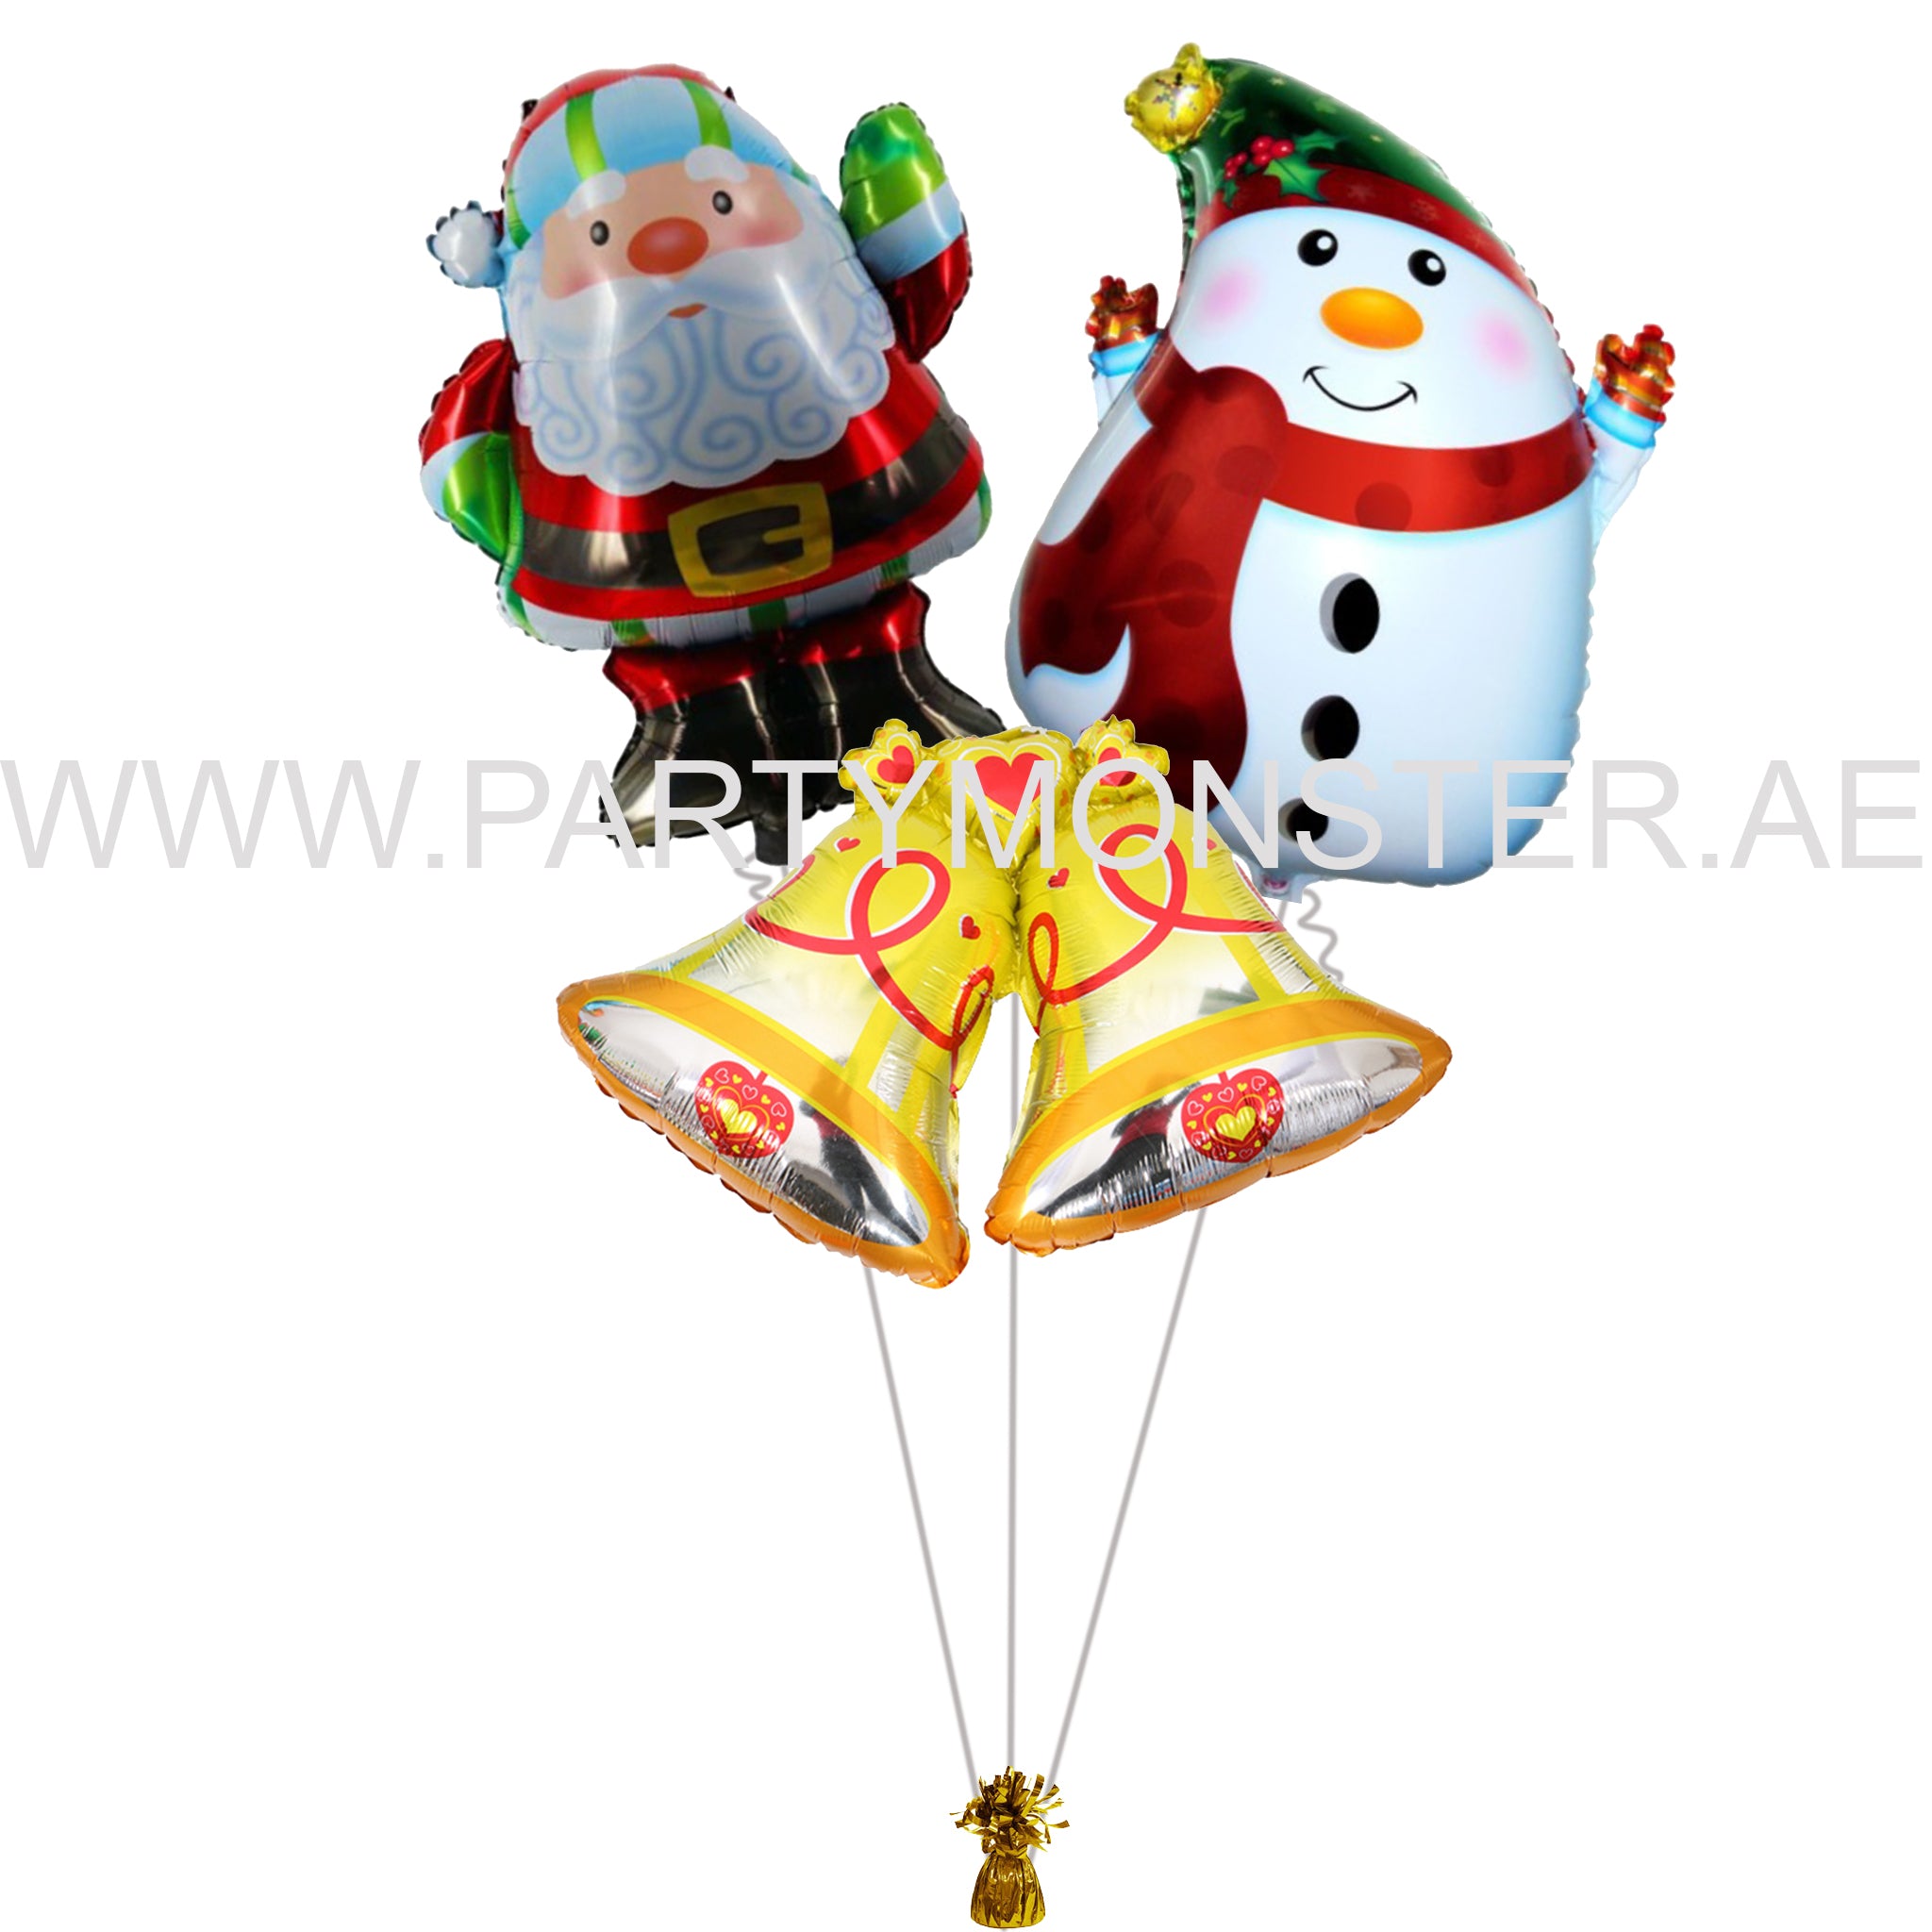 Christmas balloons for sale online in Dubai